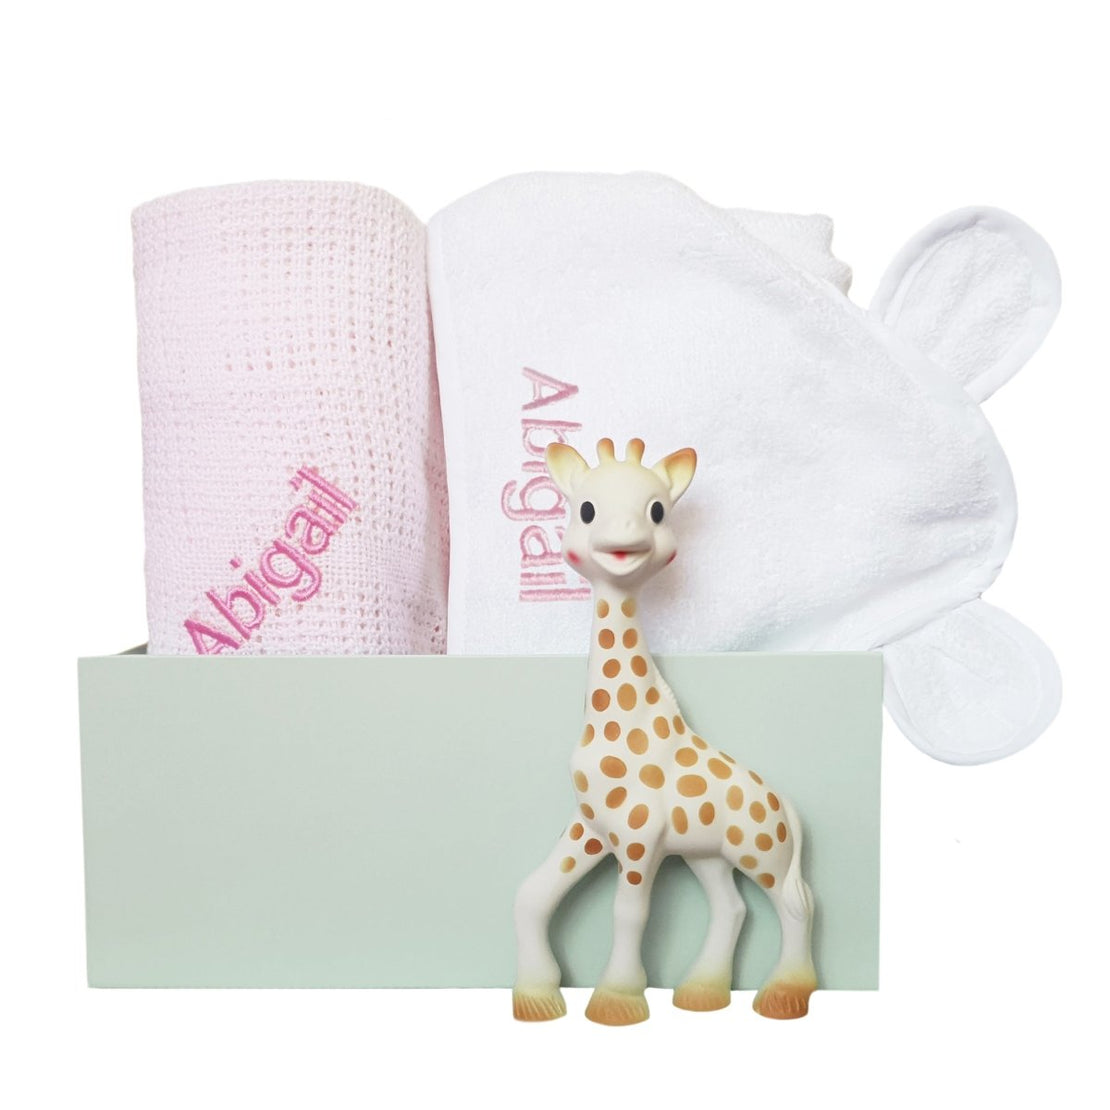 Personalised Sophie Snuggles Gift Set - Pink - LOVINGLY SIGNED (HK)